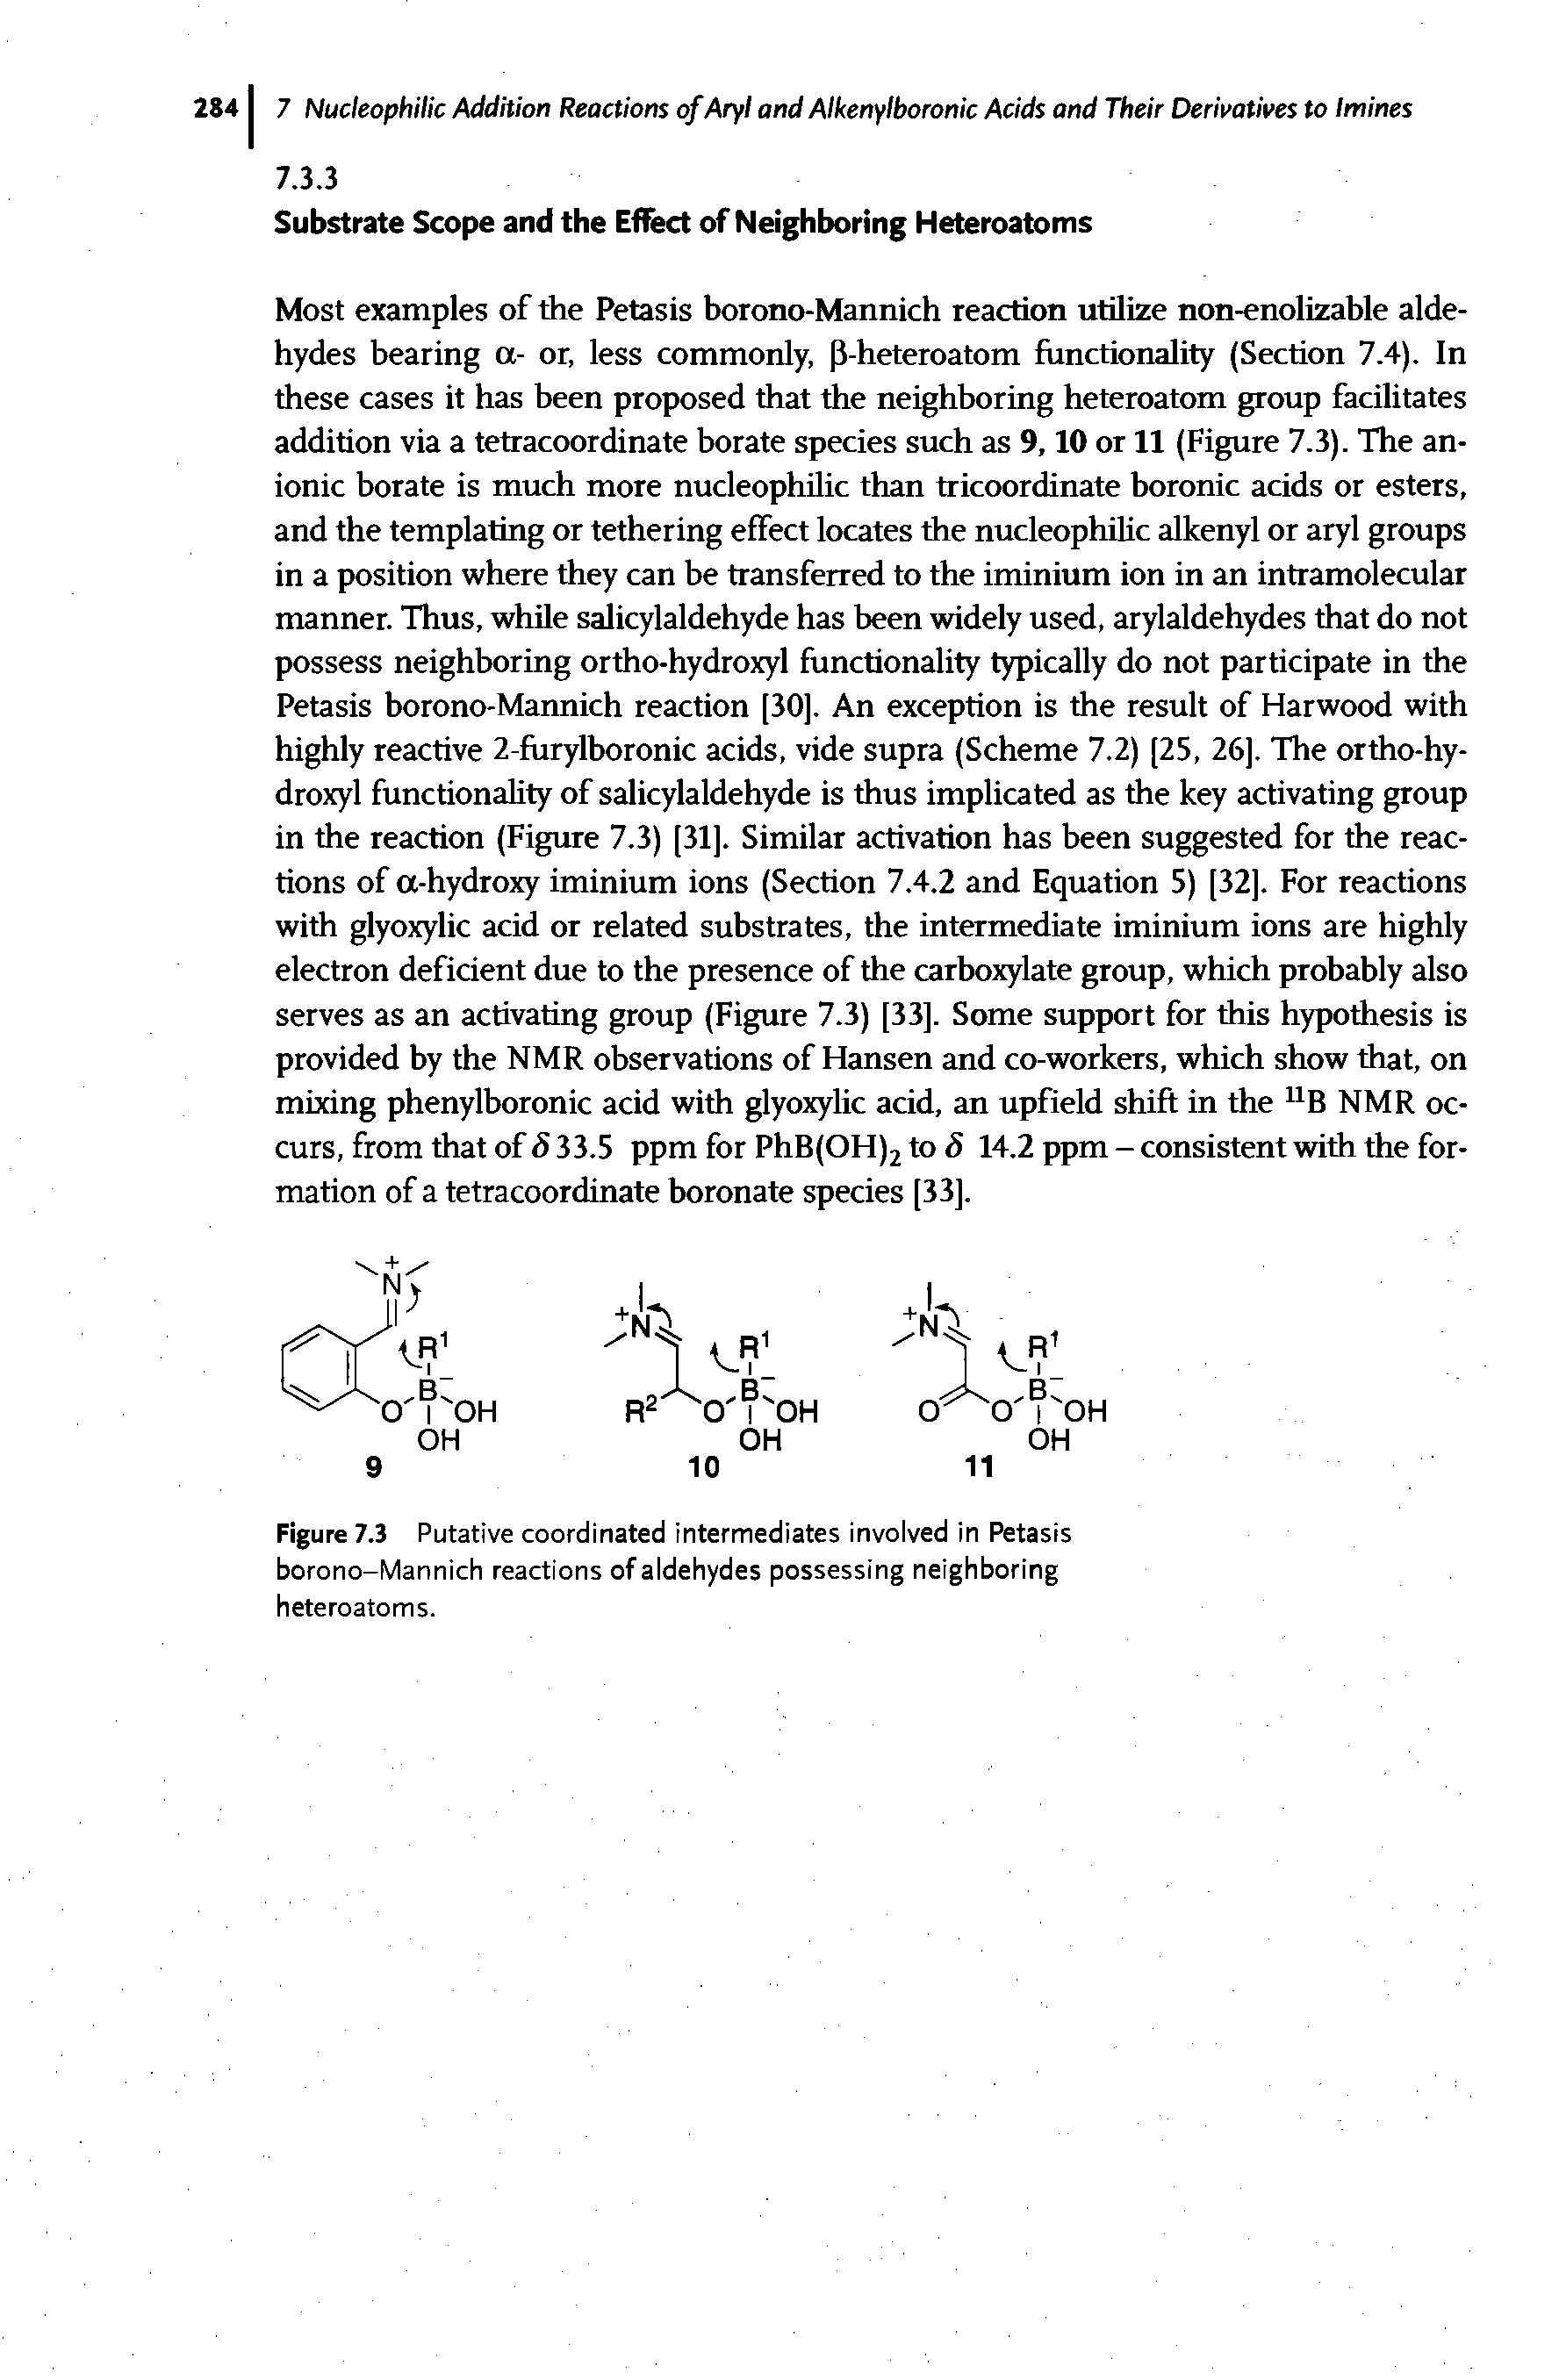 Figure 7.3 Putative coordinated intermediates involved in Petasis borono-Mannich reactions of aldehydes possessing neighboring heteroatoms.